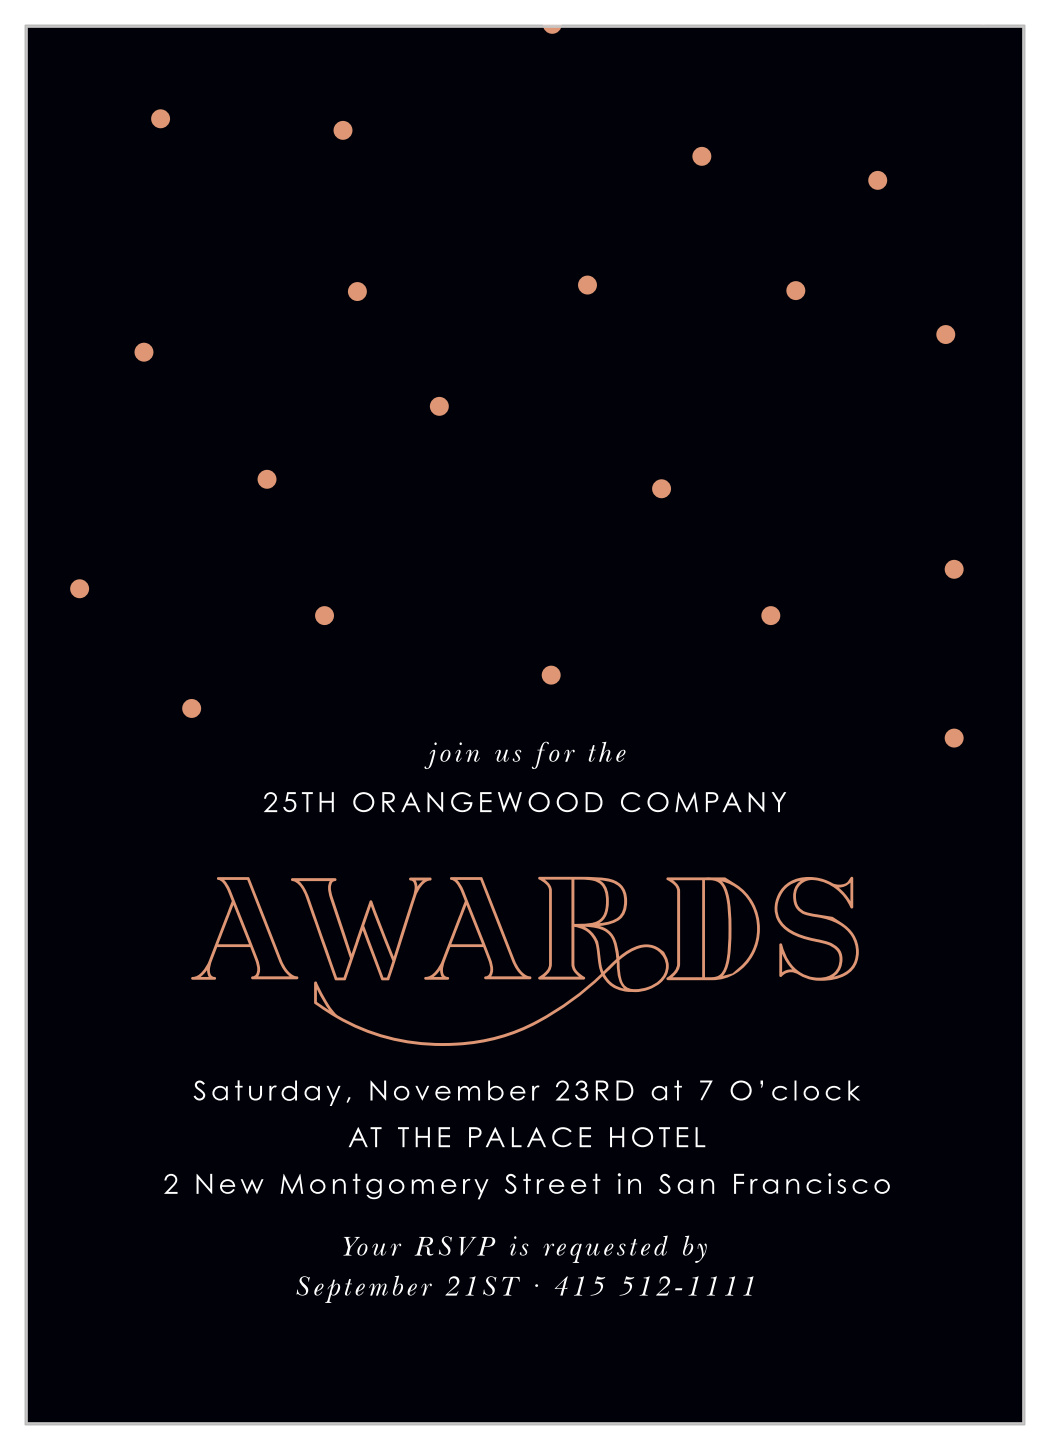 Awards Night Gala Invitation by Basic Invite